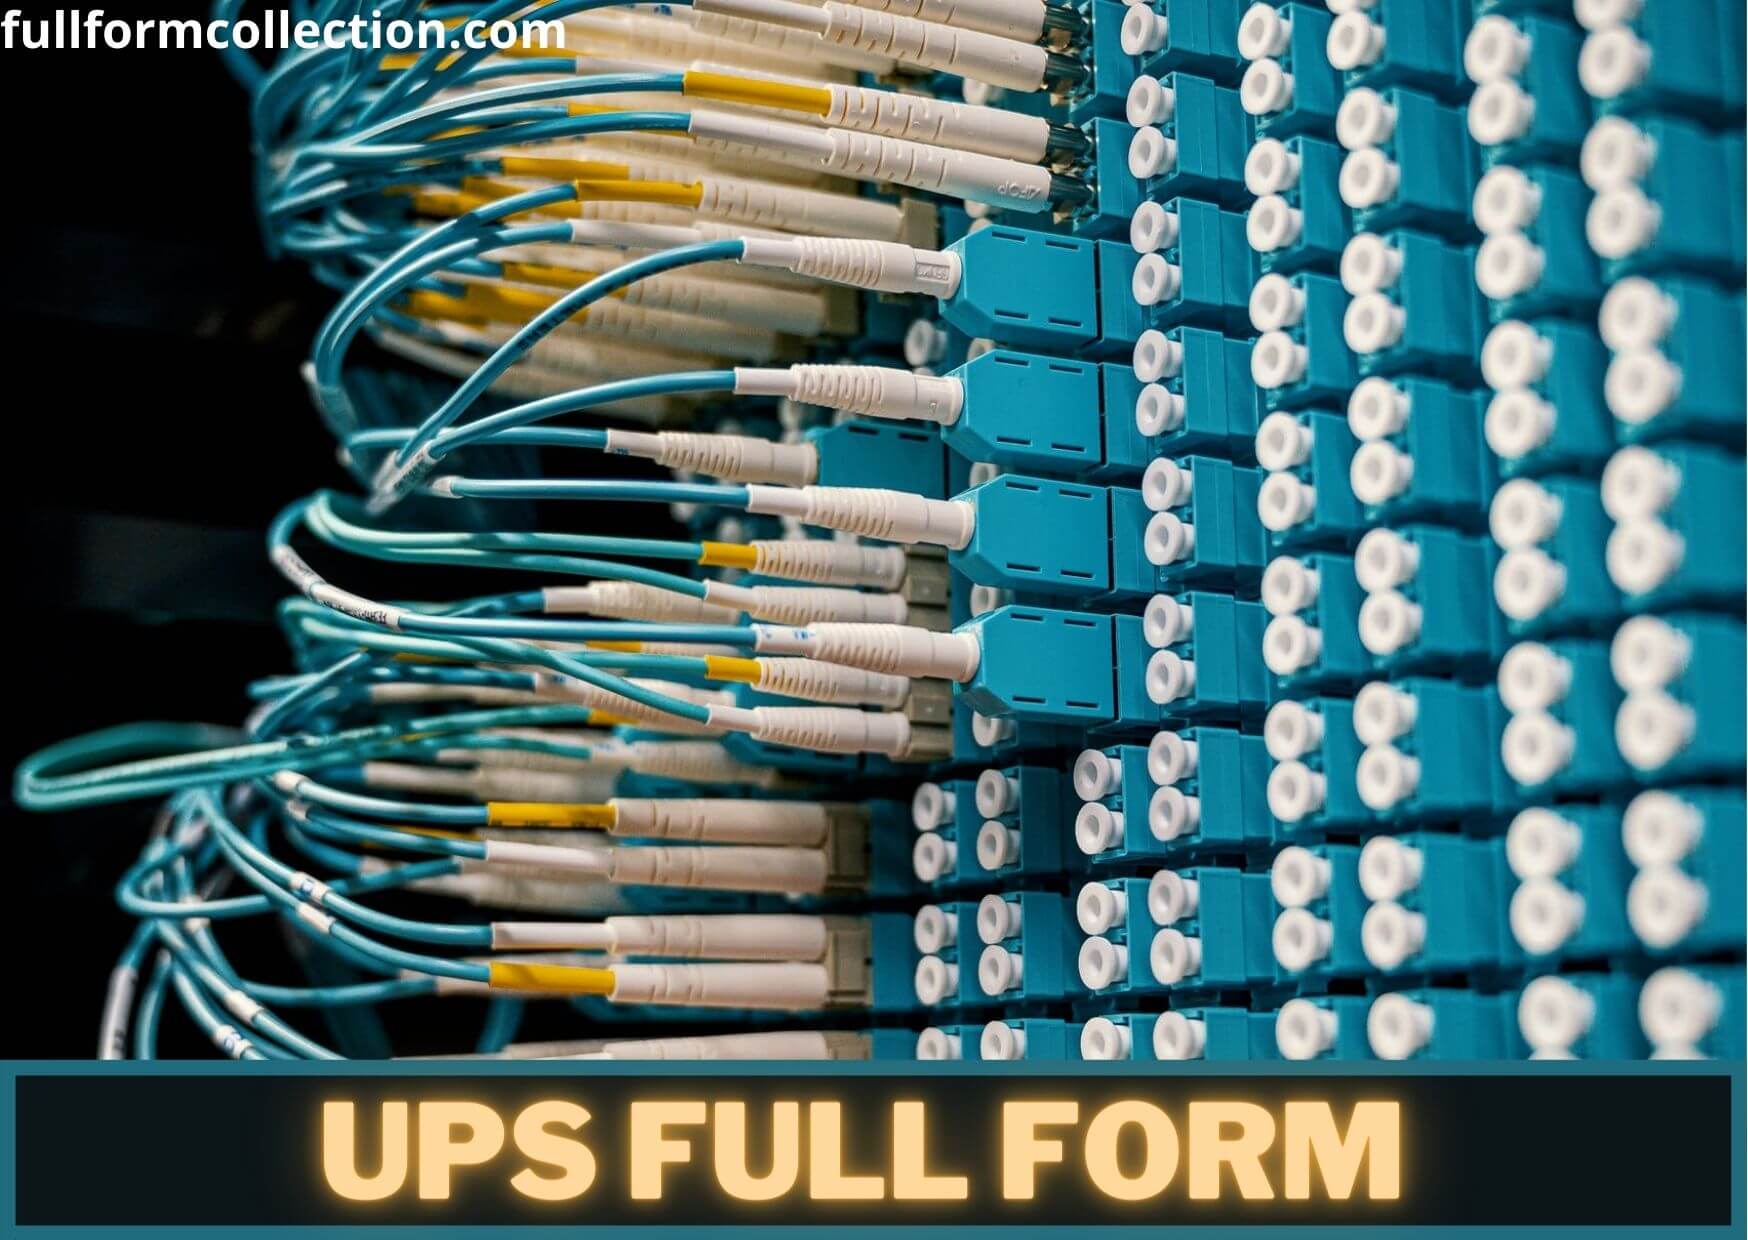 UPS Full Form